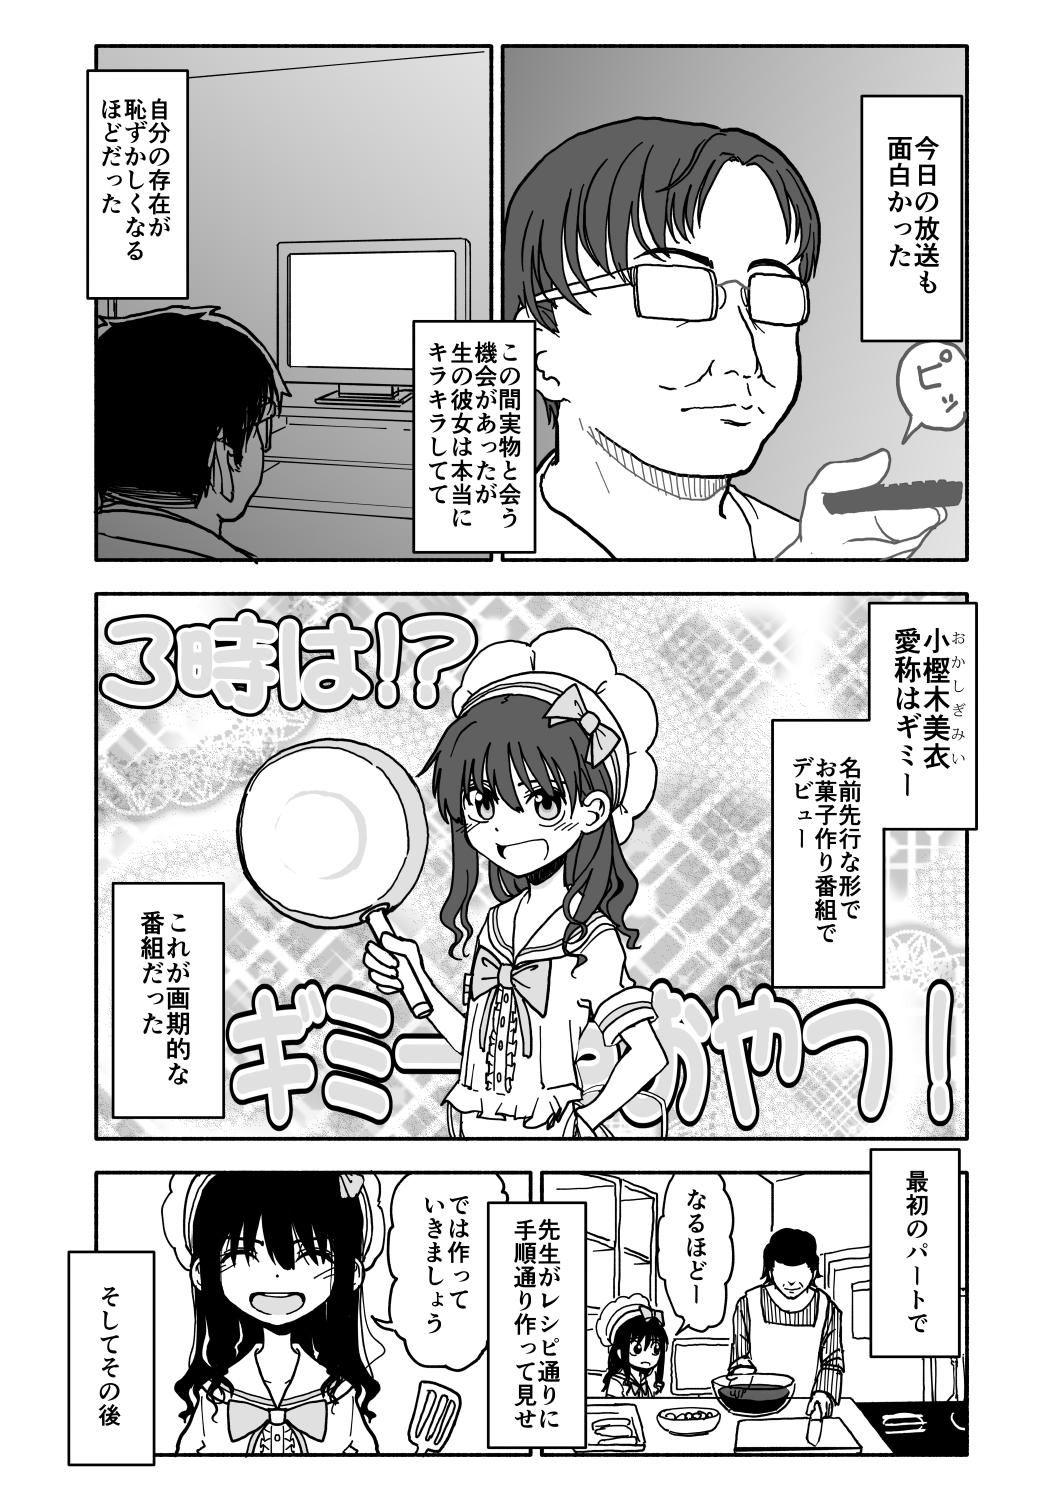 Piercing Okasi Tsukuri Idol ☆ Gimi ! Kankin choukyo manga Harcore - Page 4